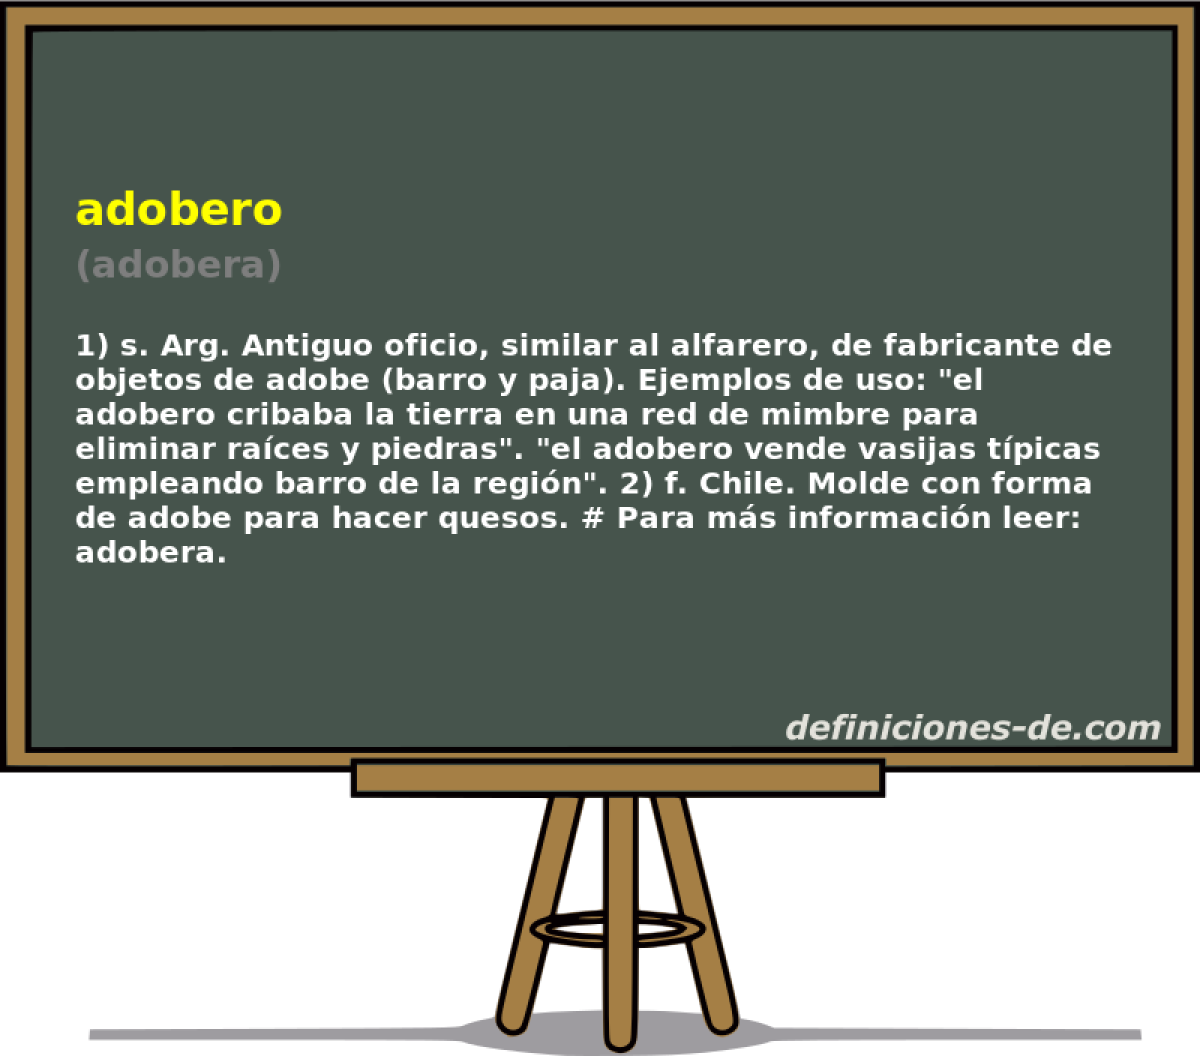 adobero (adobera)